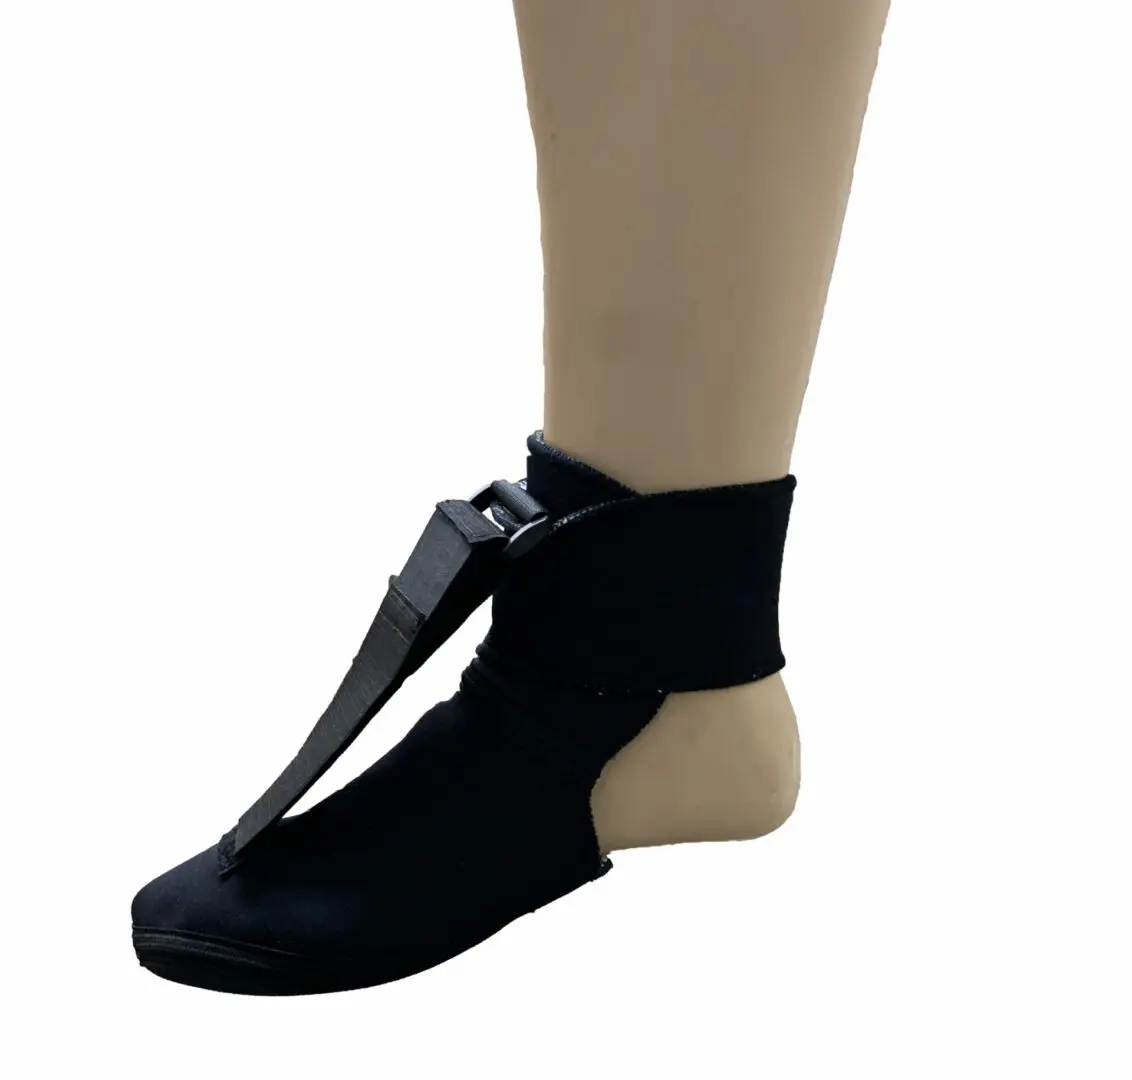 Plantar Fasciitis Night Sock Splint - Stretching Boot Splint for Sleeping  Achilles Tendonitis Heel Pain Relief Plantar Fasciitis Night Foot Brace